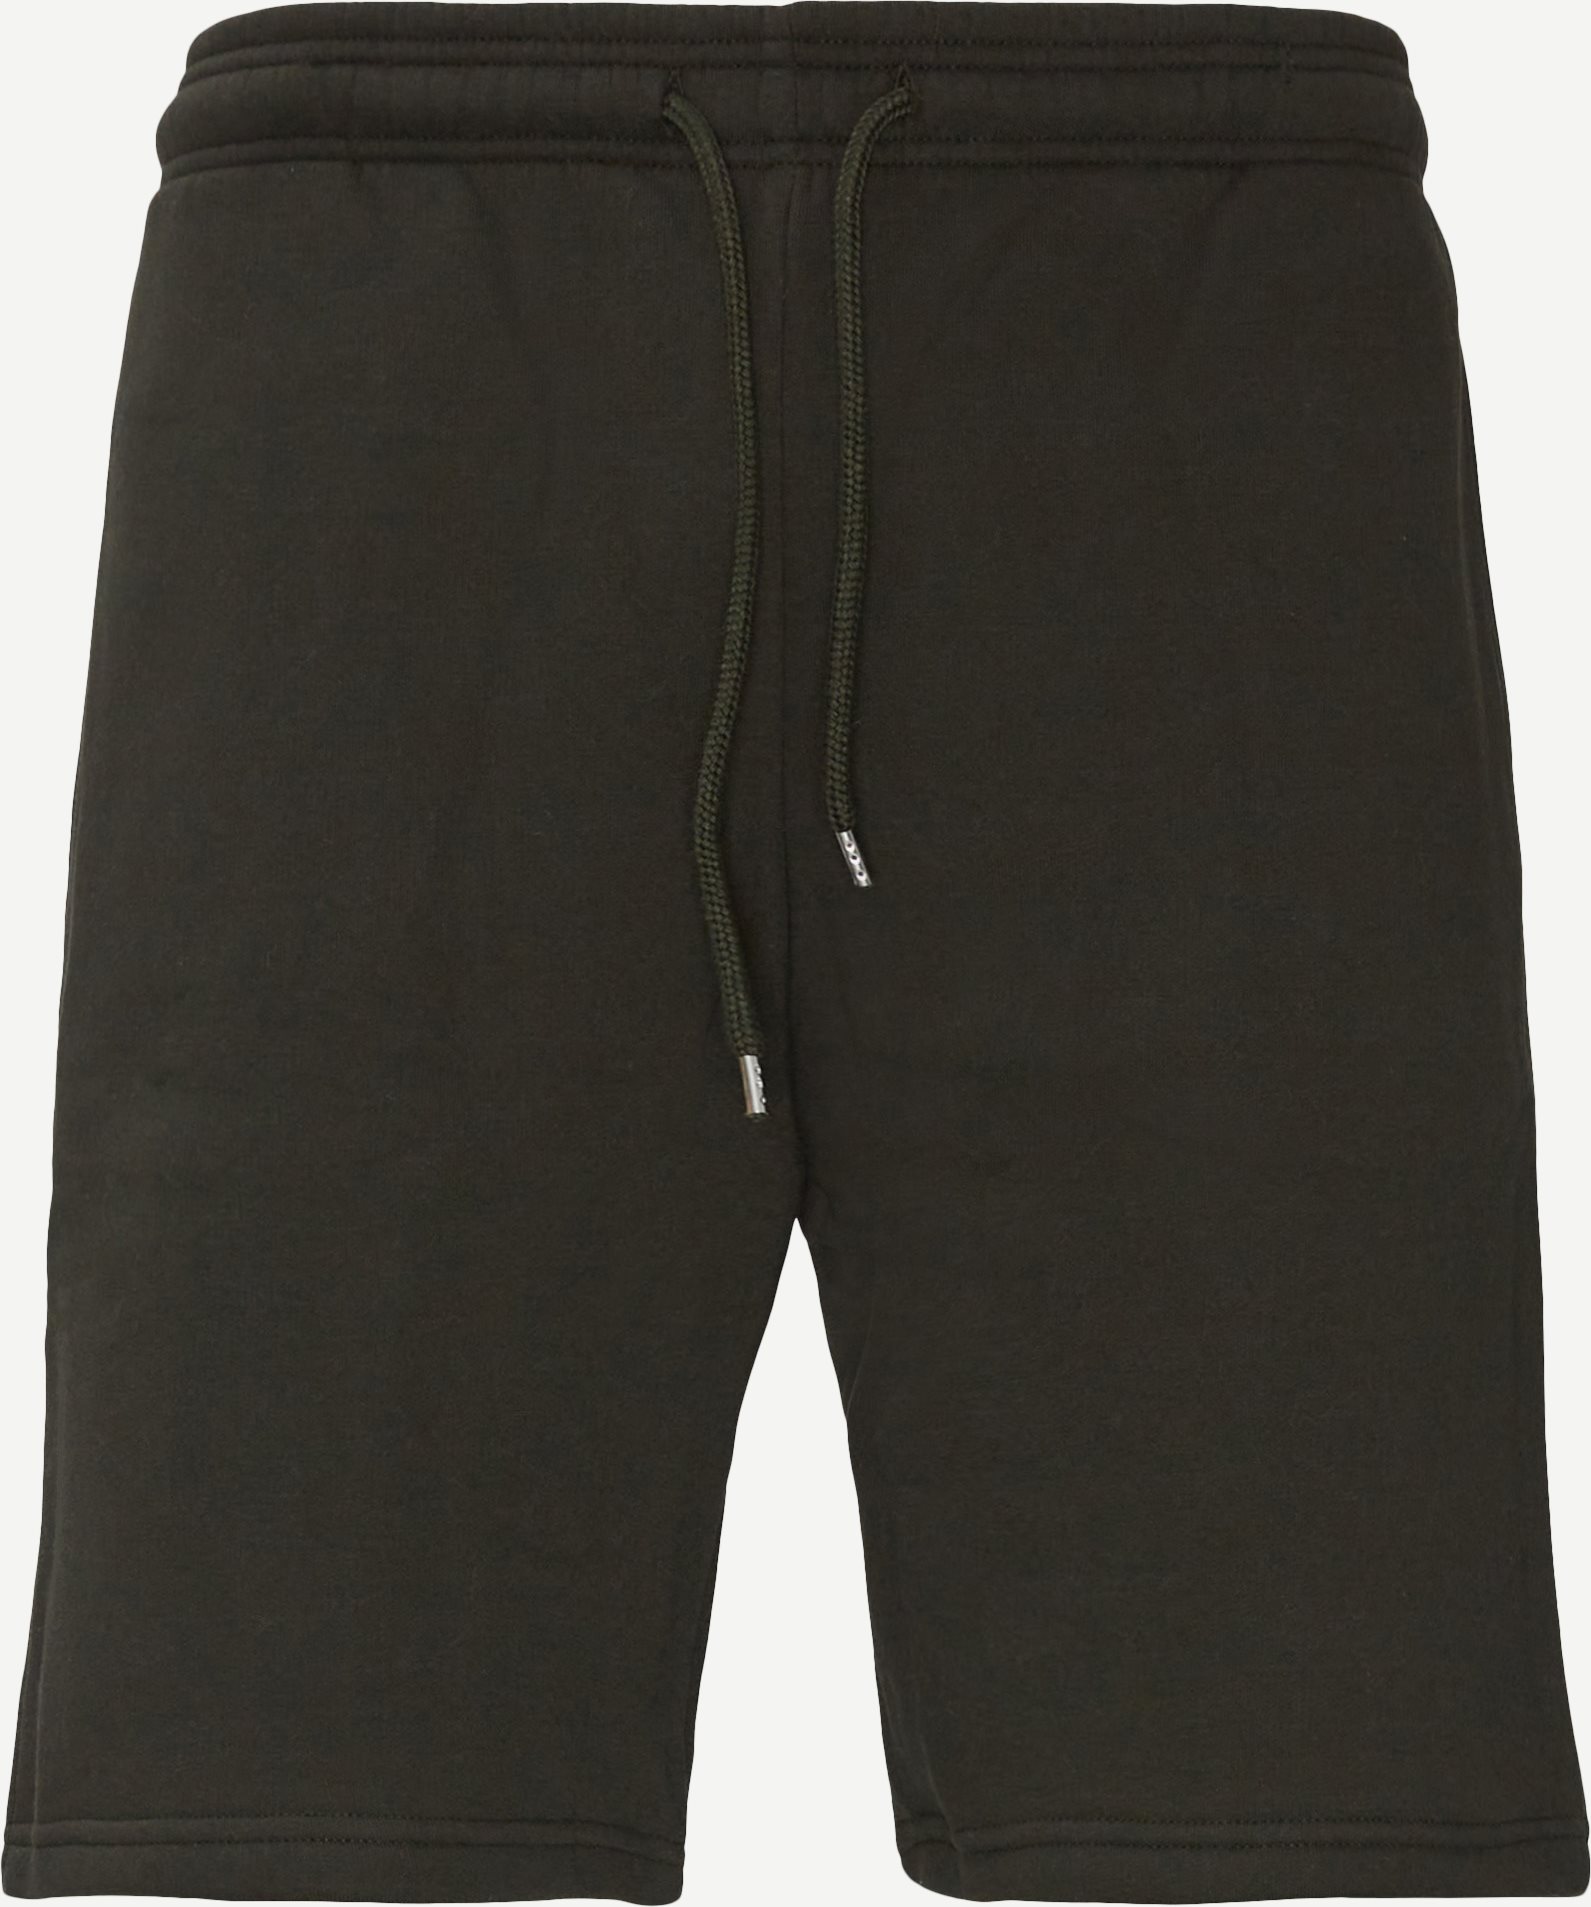 Shorts - Regular fit - Army